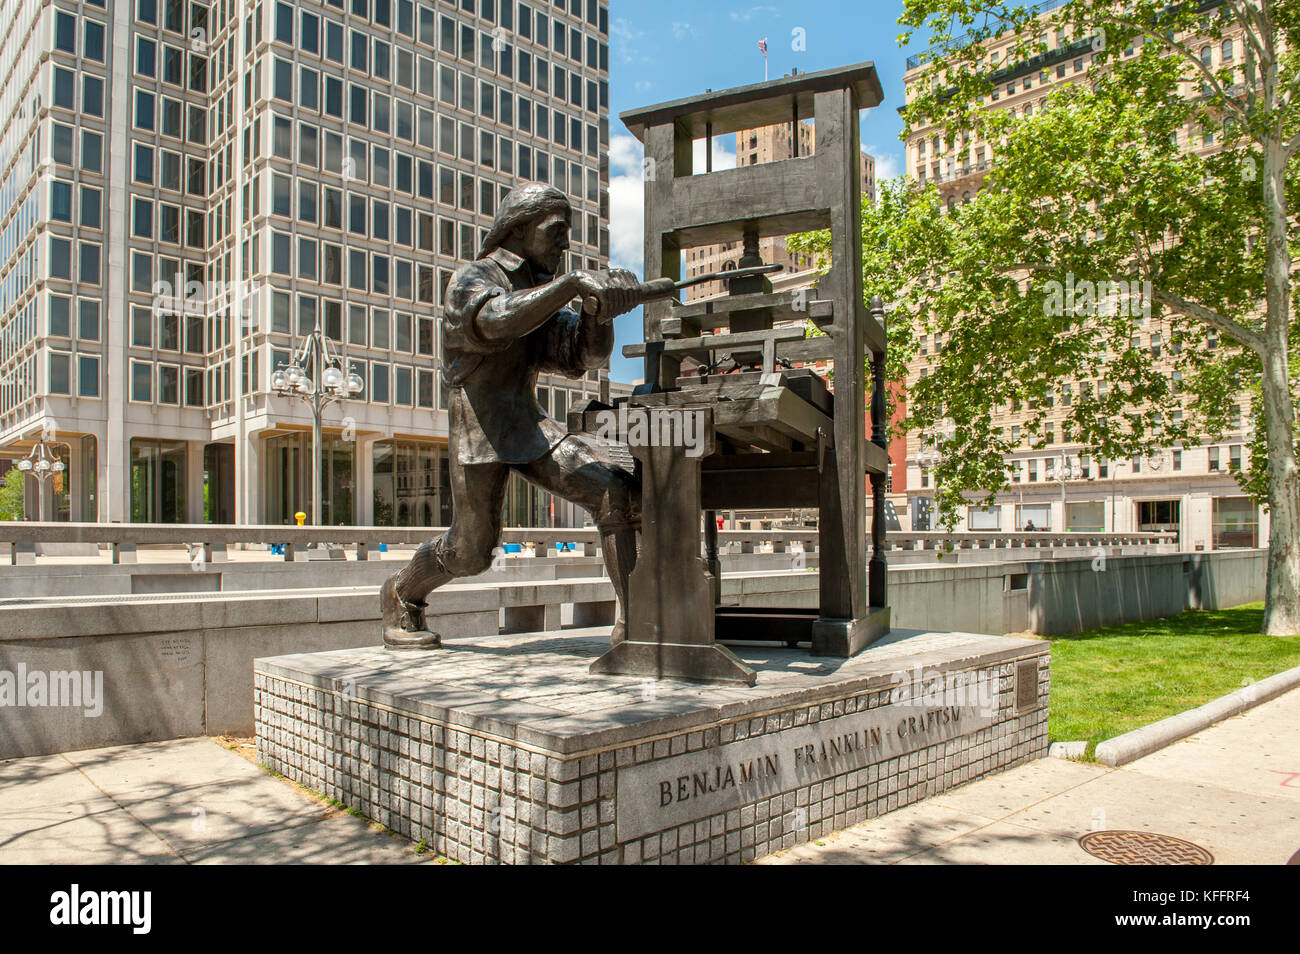 Benjamin Franklin Handwerker Statue des Bildhauers Joe Brown in Philadelphia, Pennsylvania, USA. Stockfoto